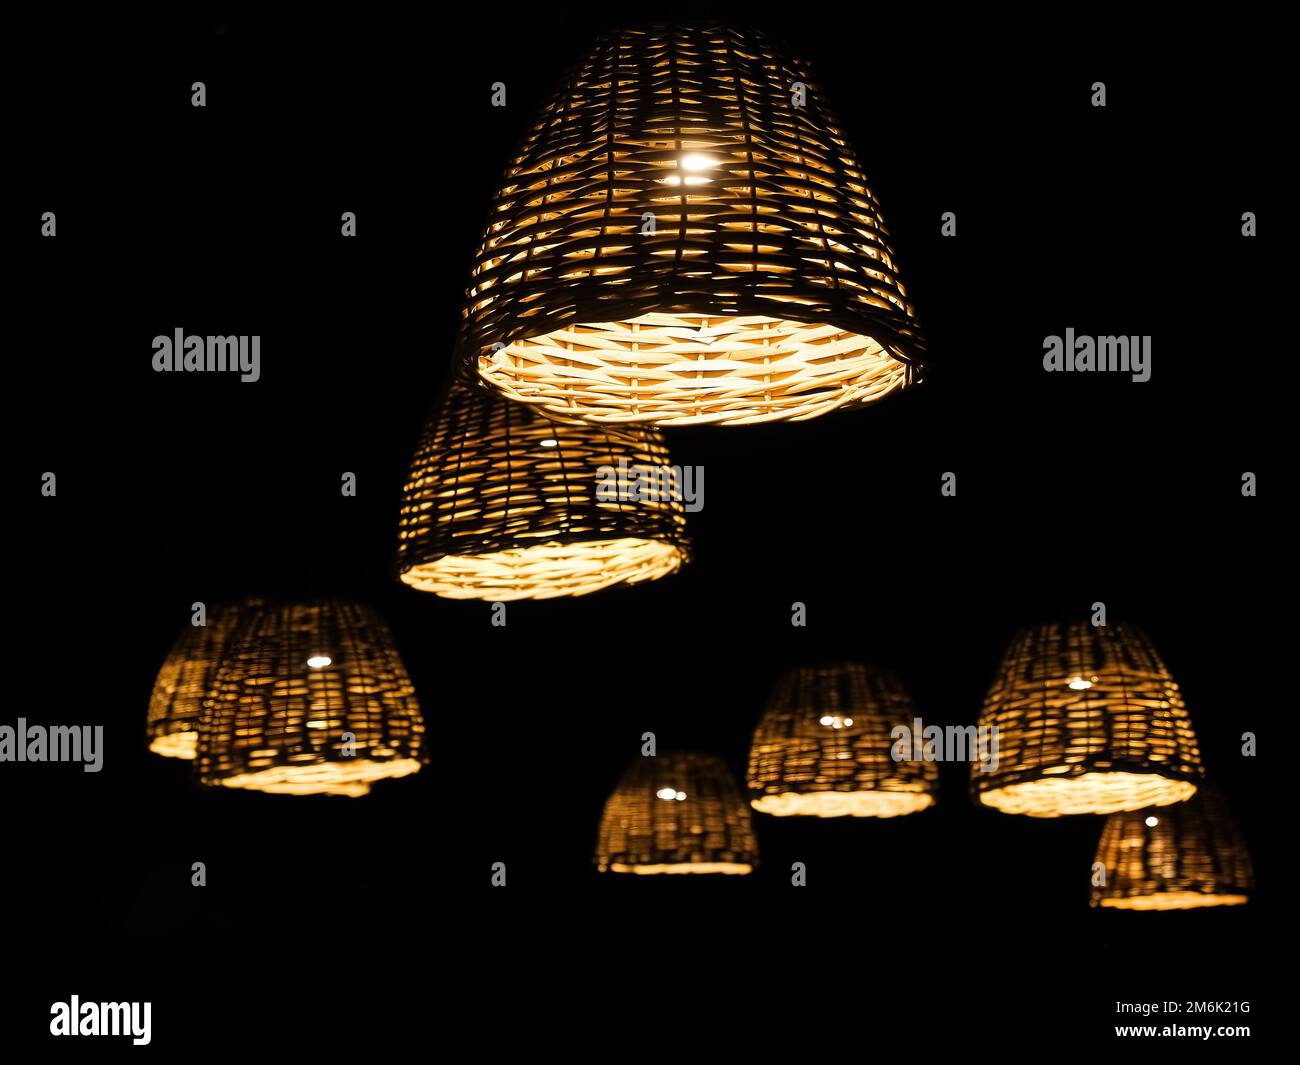 Viele Lampen mit Rattlampenschirmen hängen im Dunkeln. Nachtparkbeleuchtung. Selektiver Fokus. Stockfoto